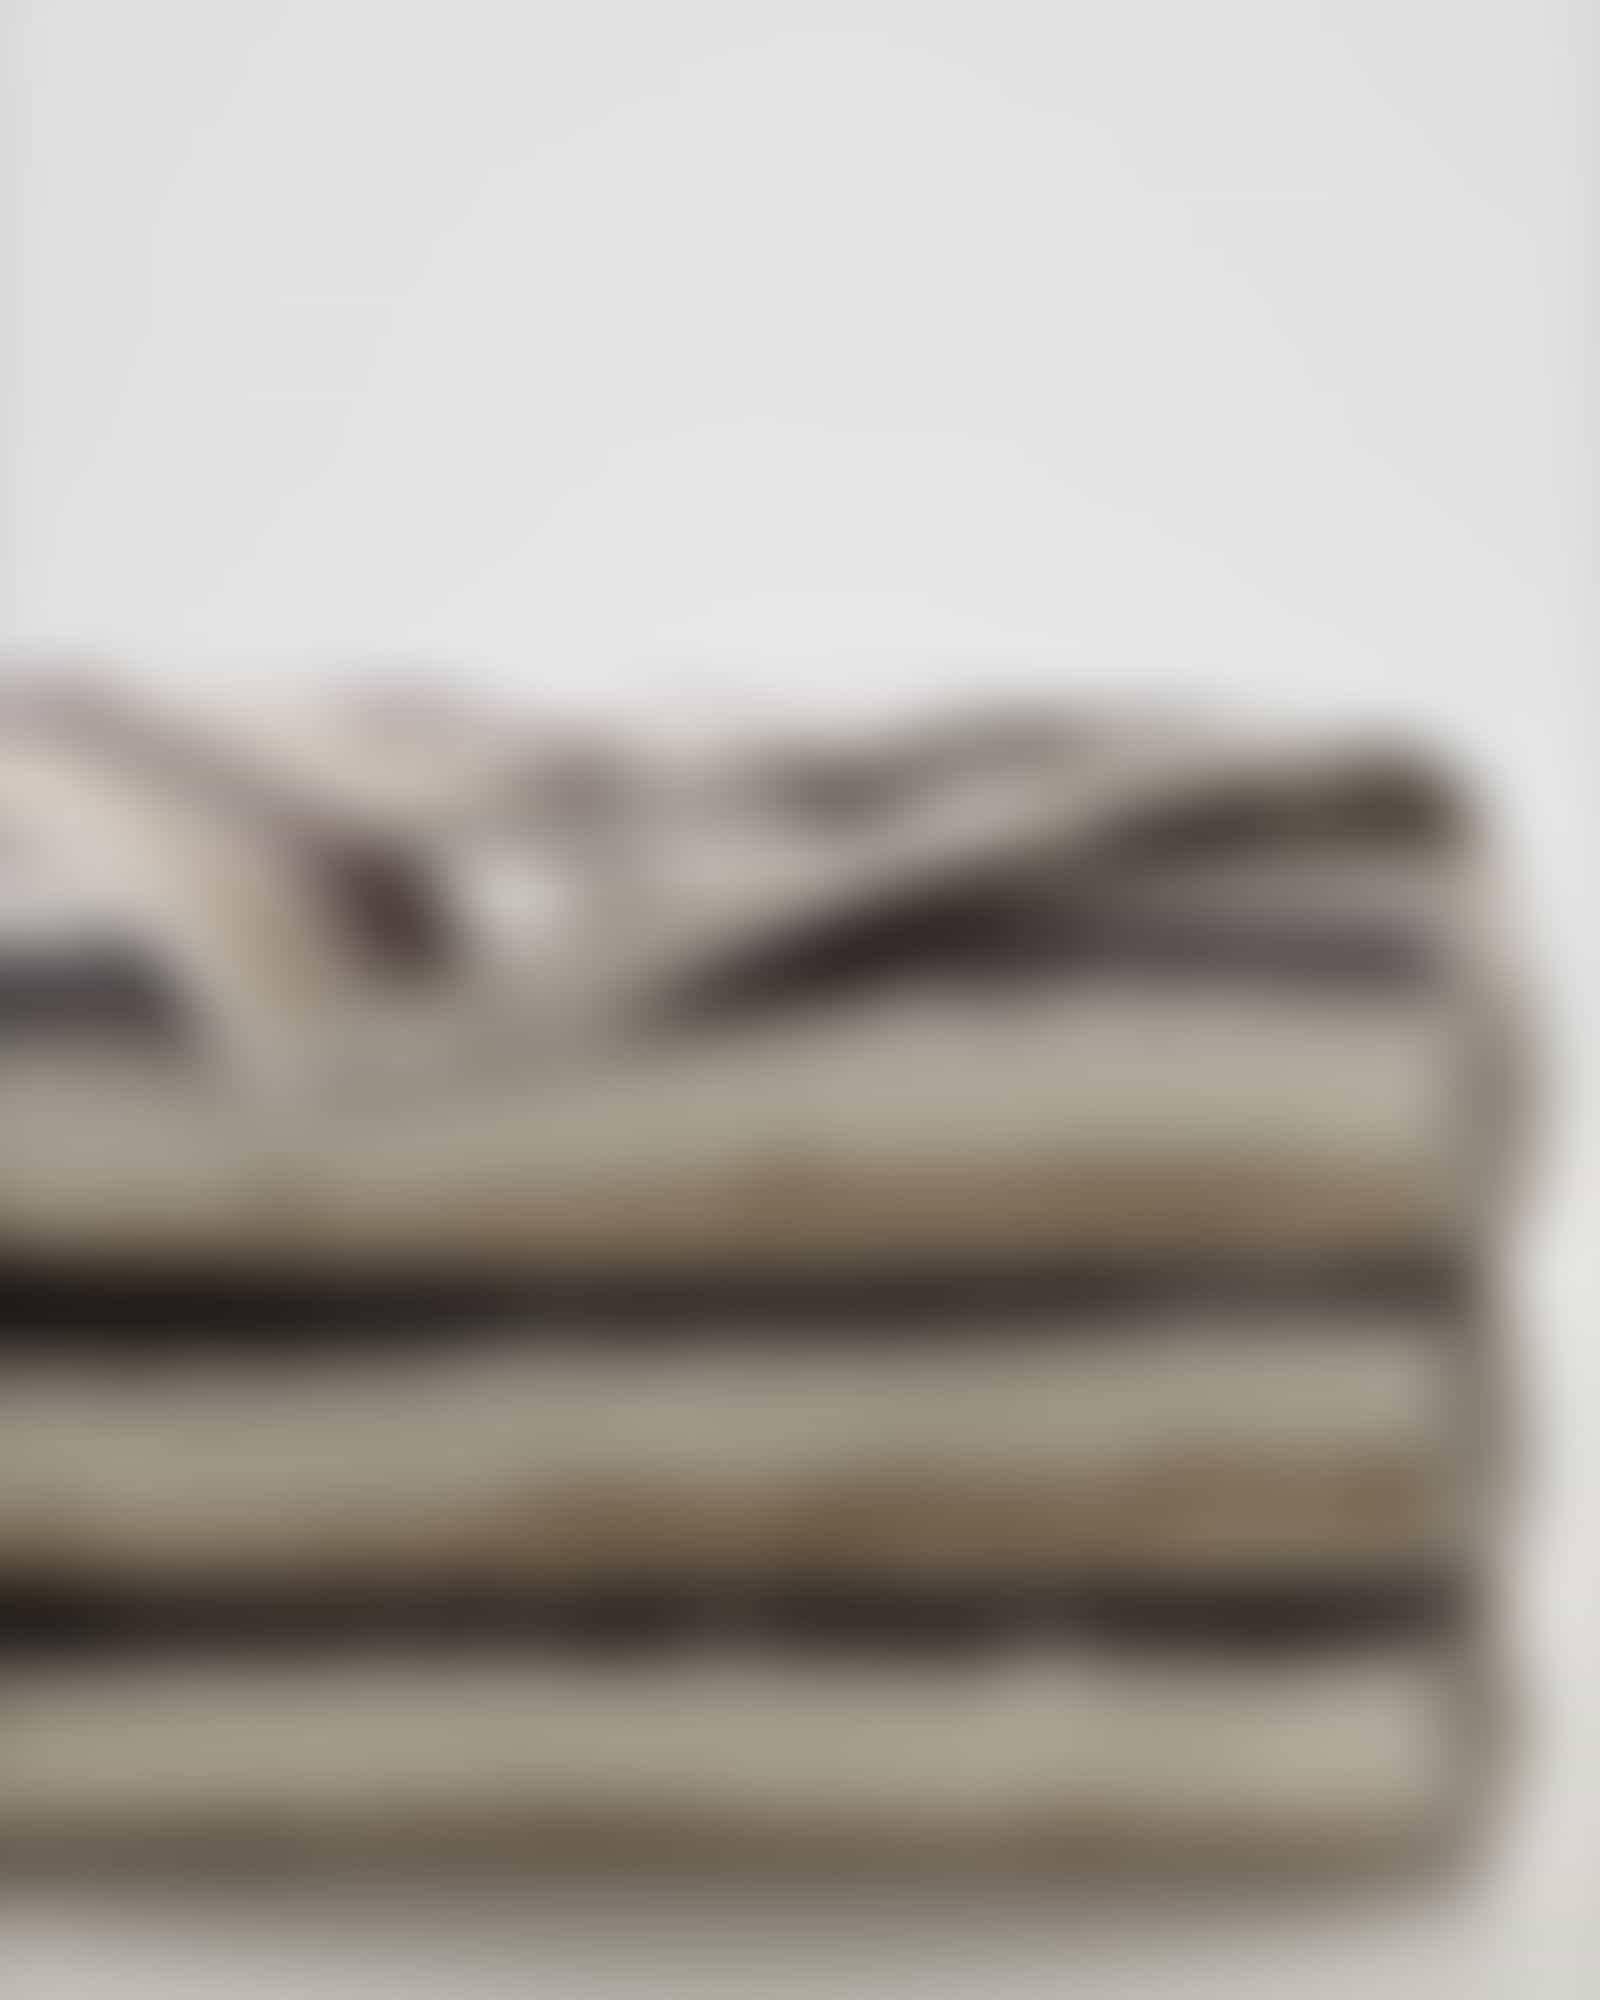 Villeroy &amp; Boch Handtücher Coordinates Stripes 2551 - Farbe: noncolor - 37 - Handtuch 50x100 cm